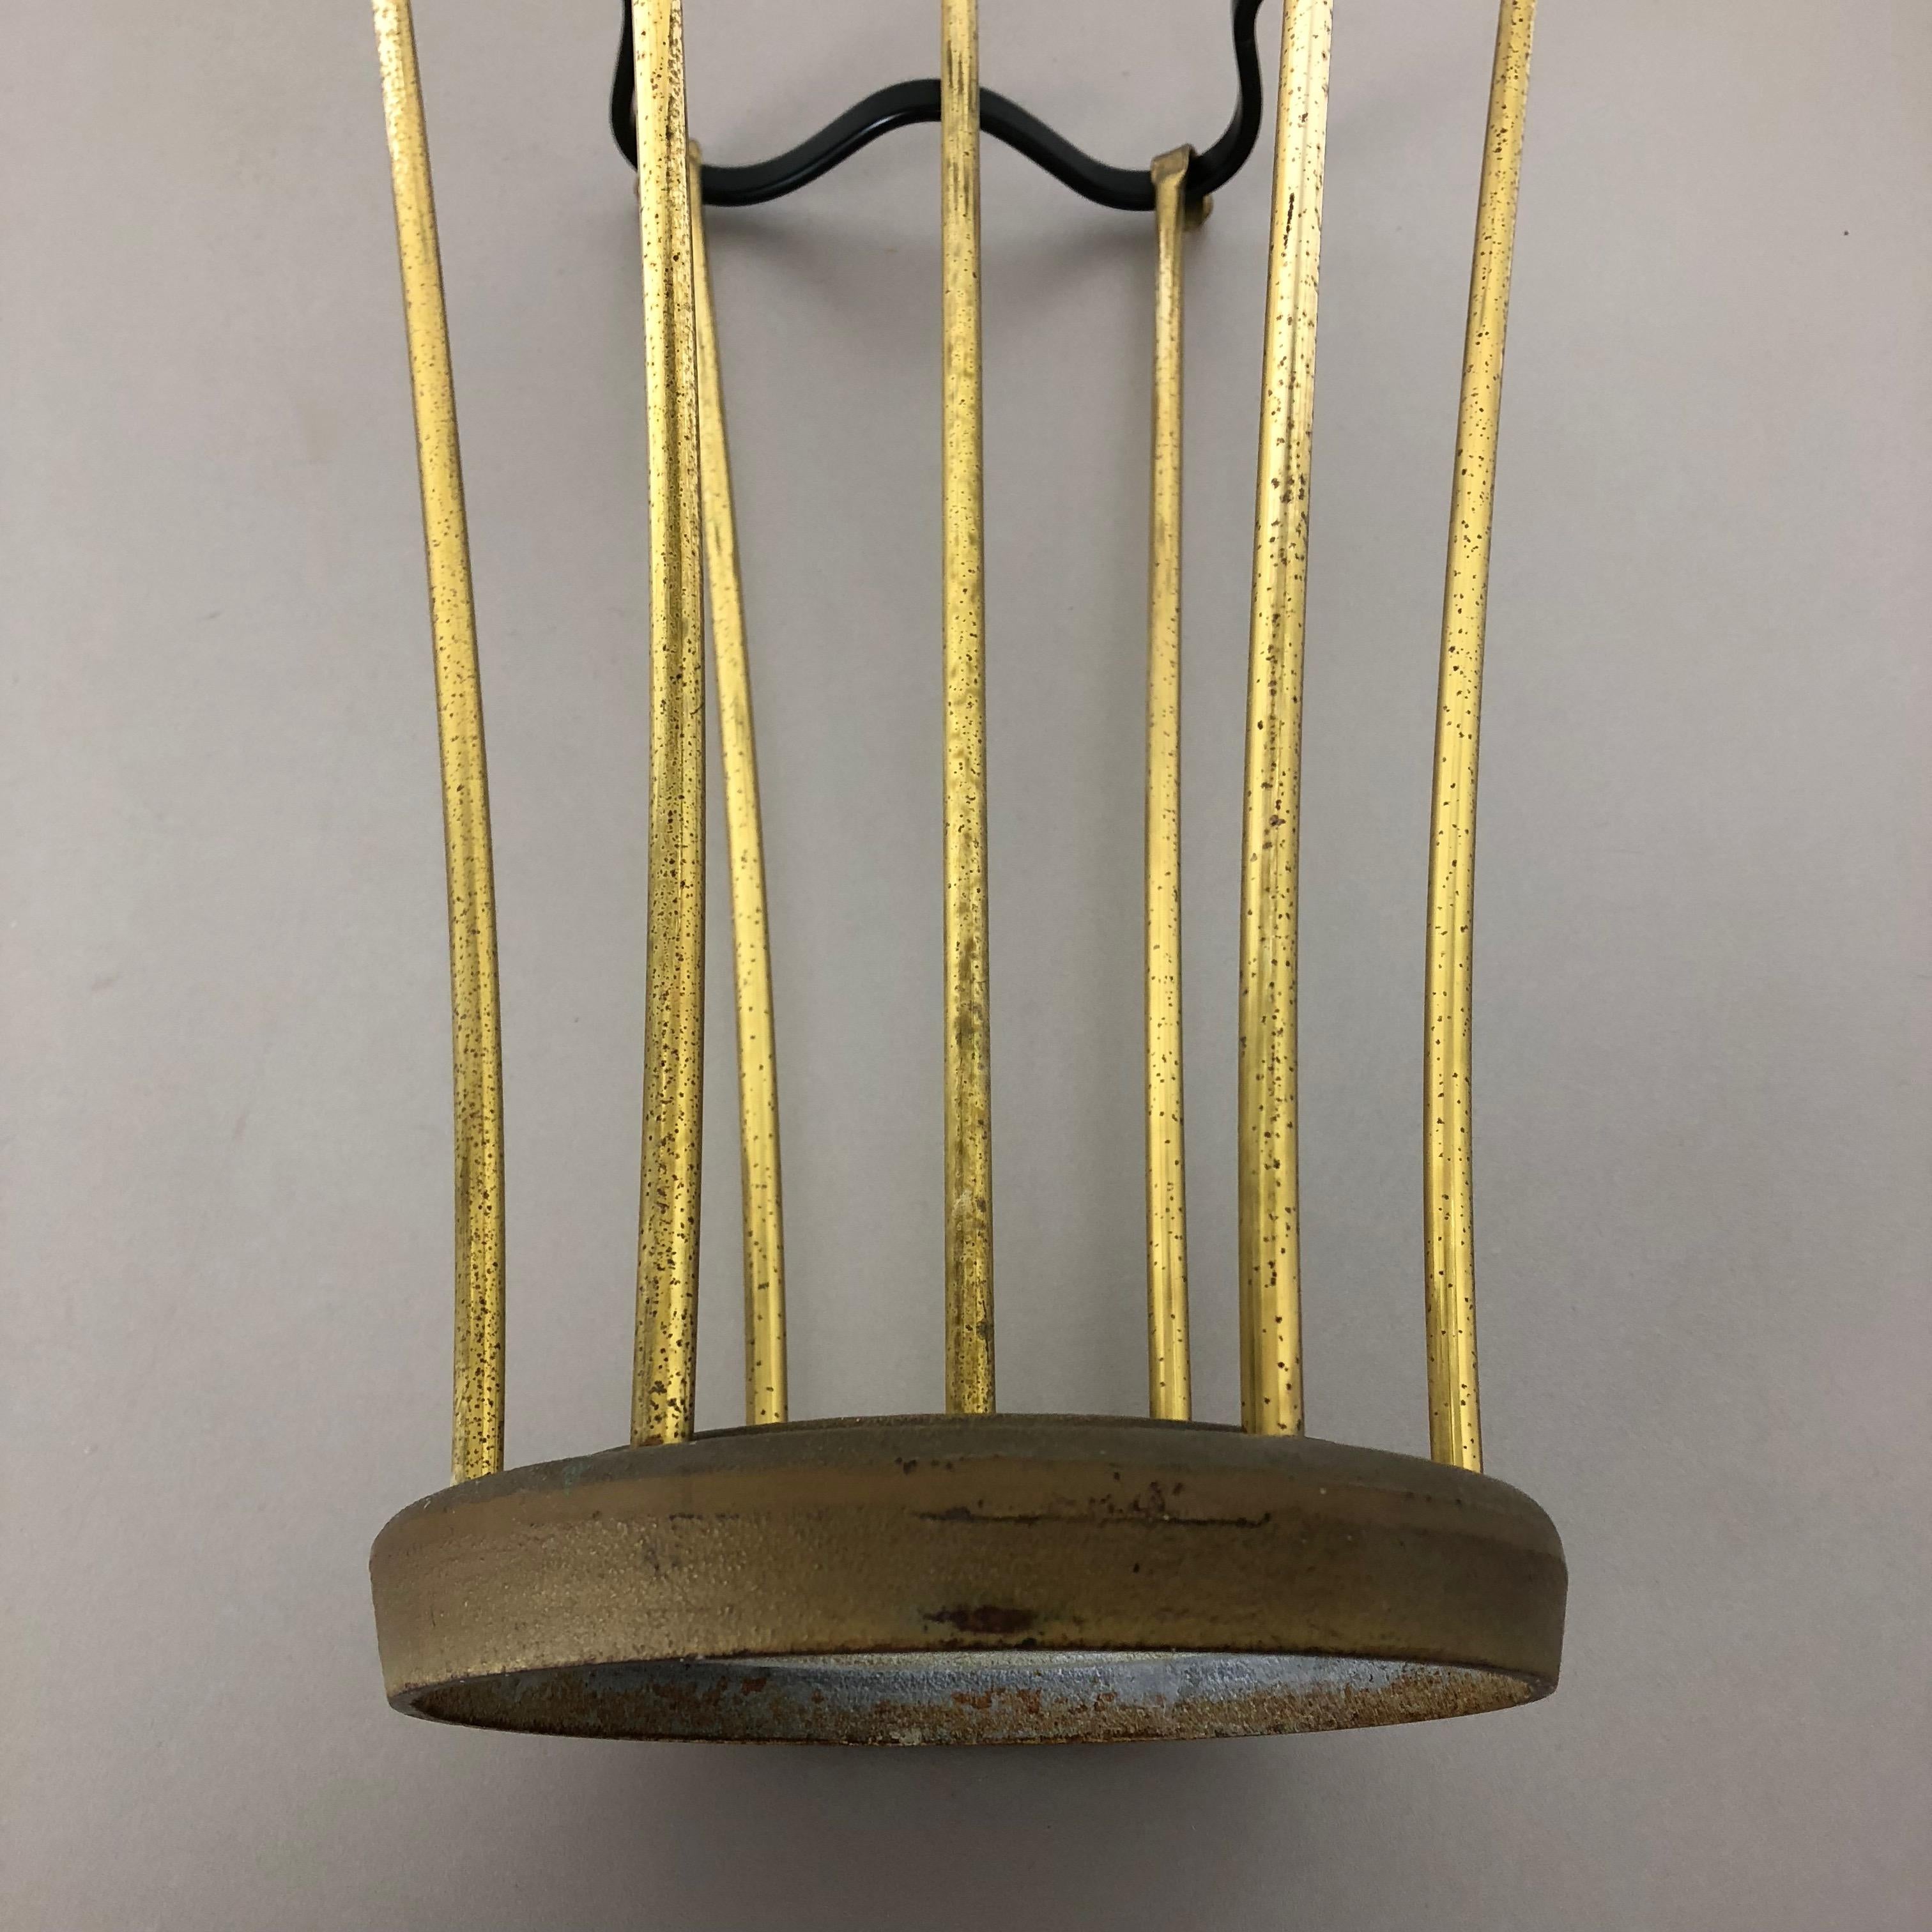 Midcentury Brass Mategot Style Hollywood Regency Umbrella Stand, France, 1950s For Sale 12